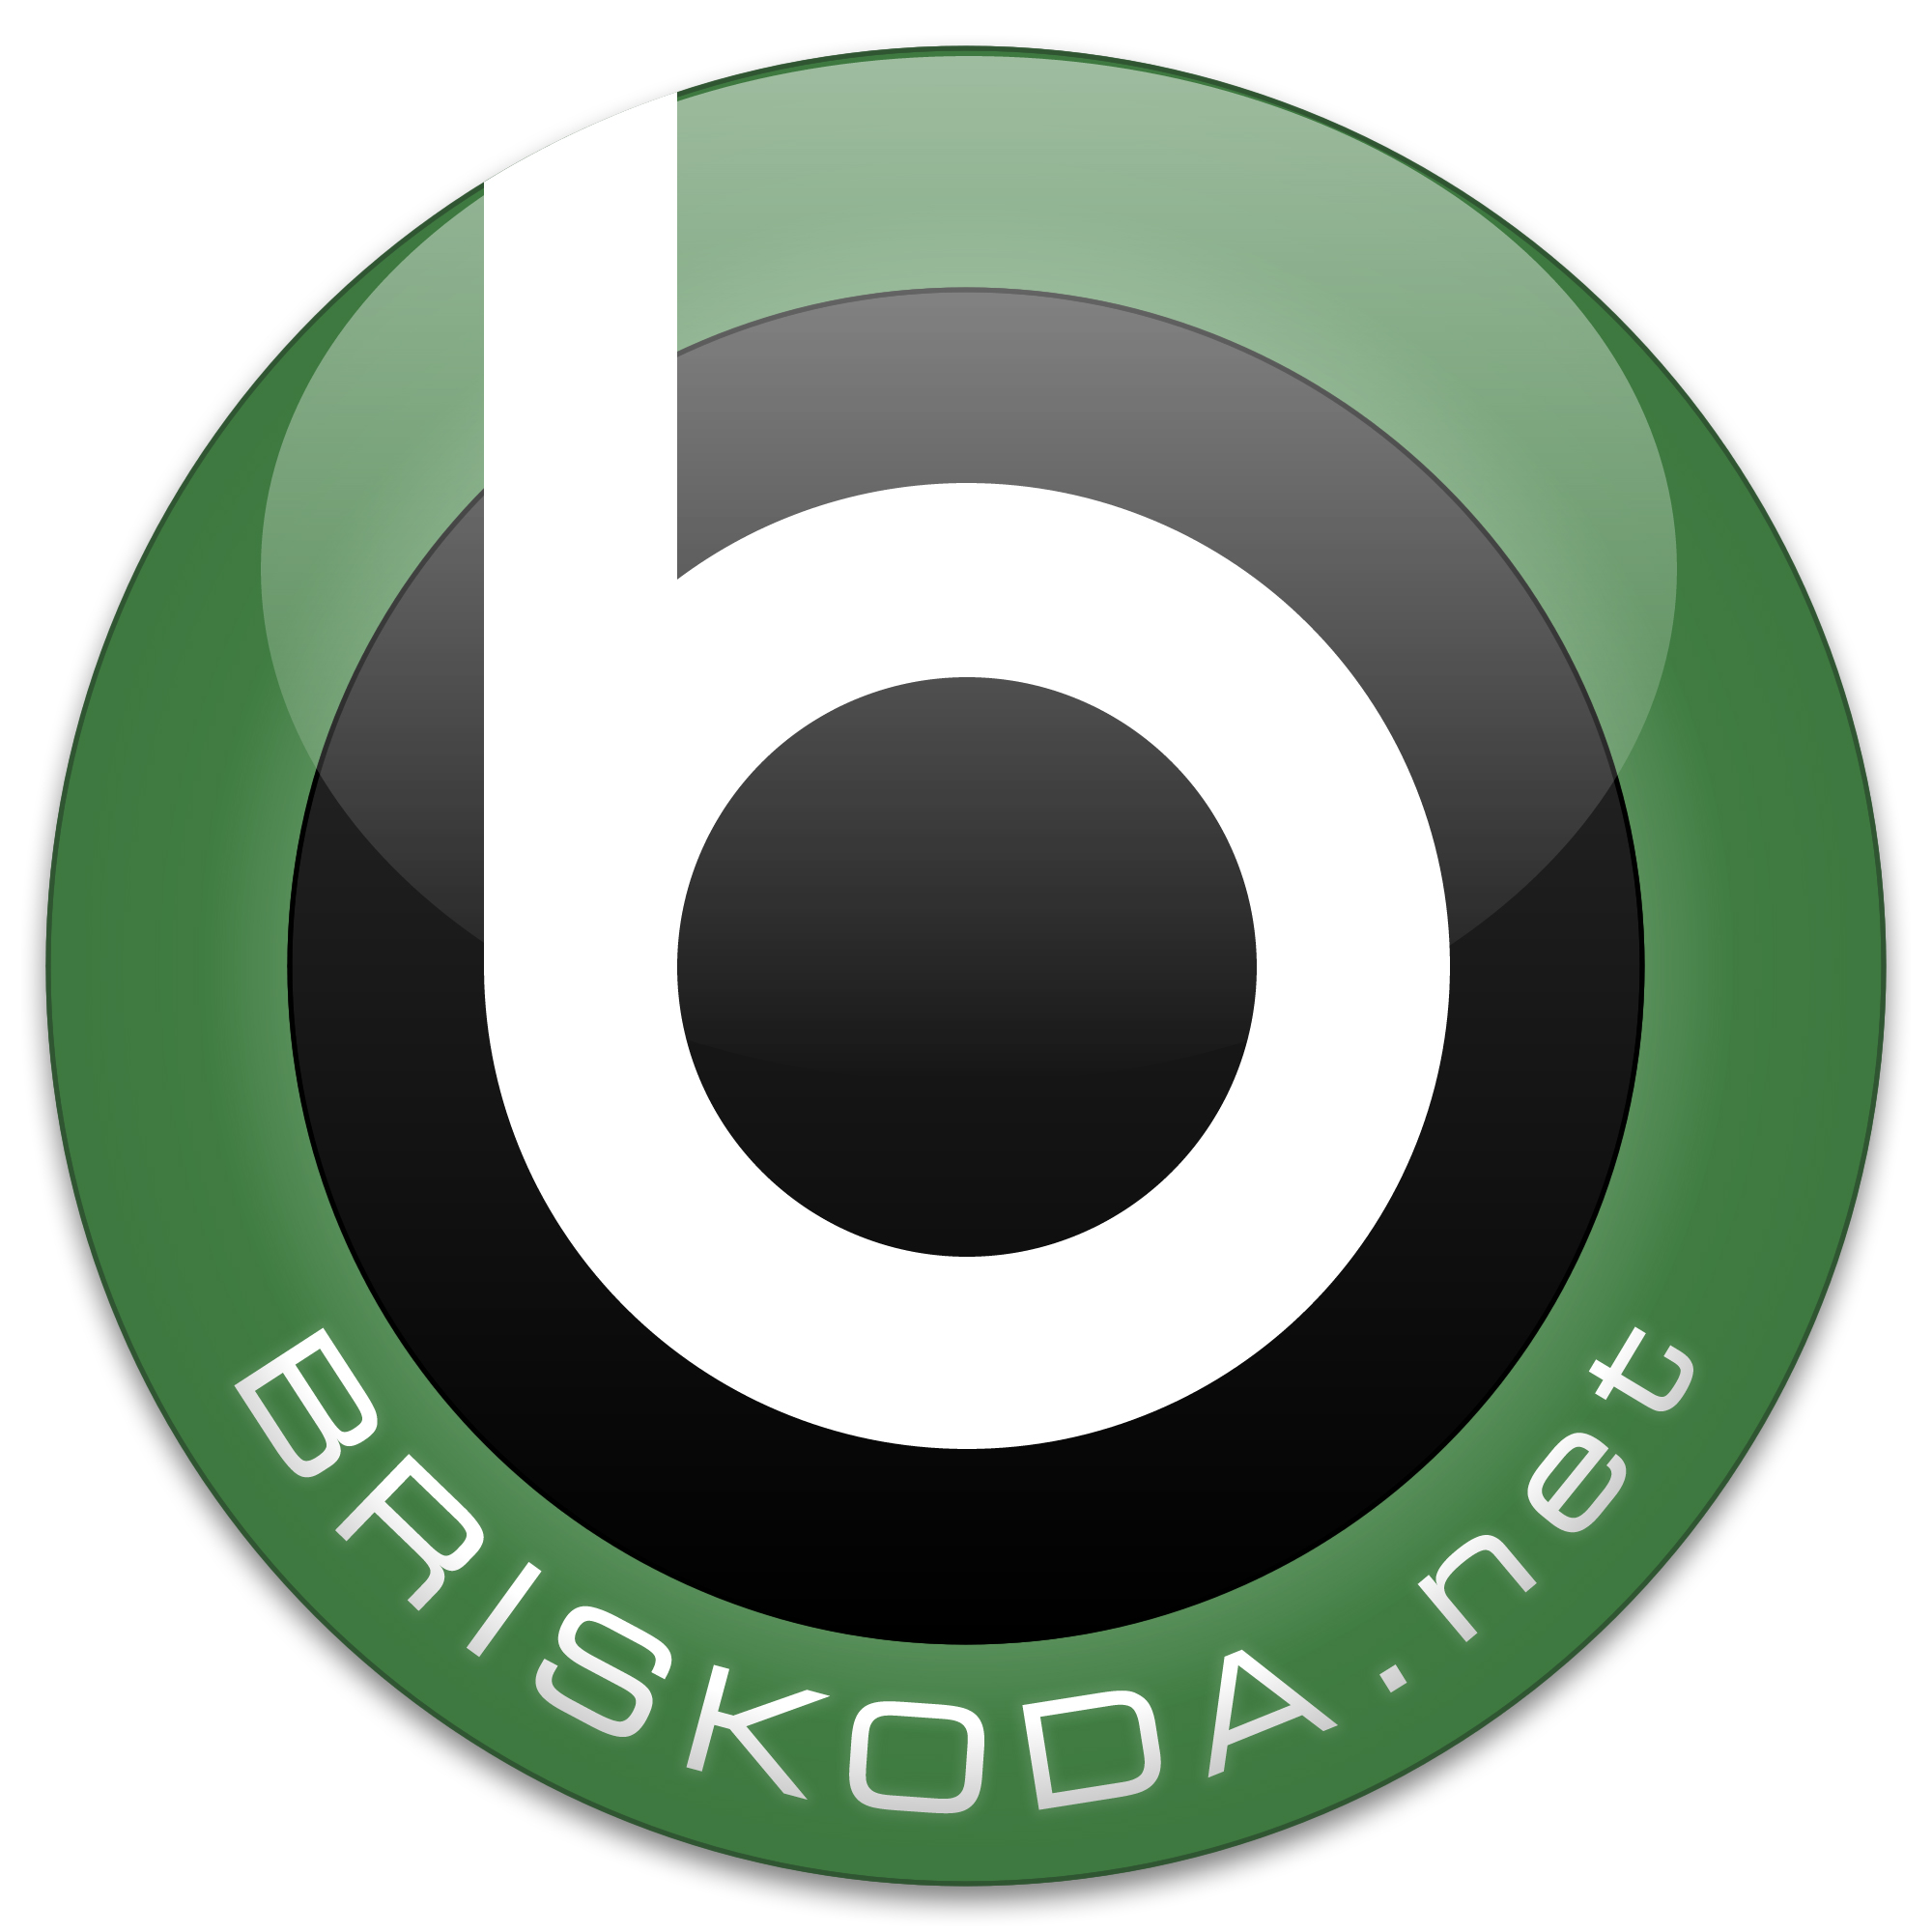 www.briskoda.net